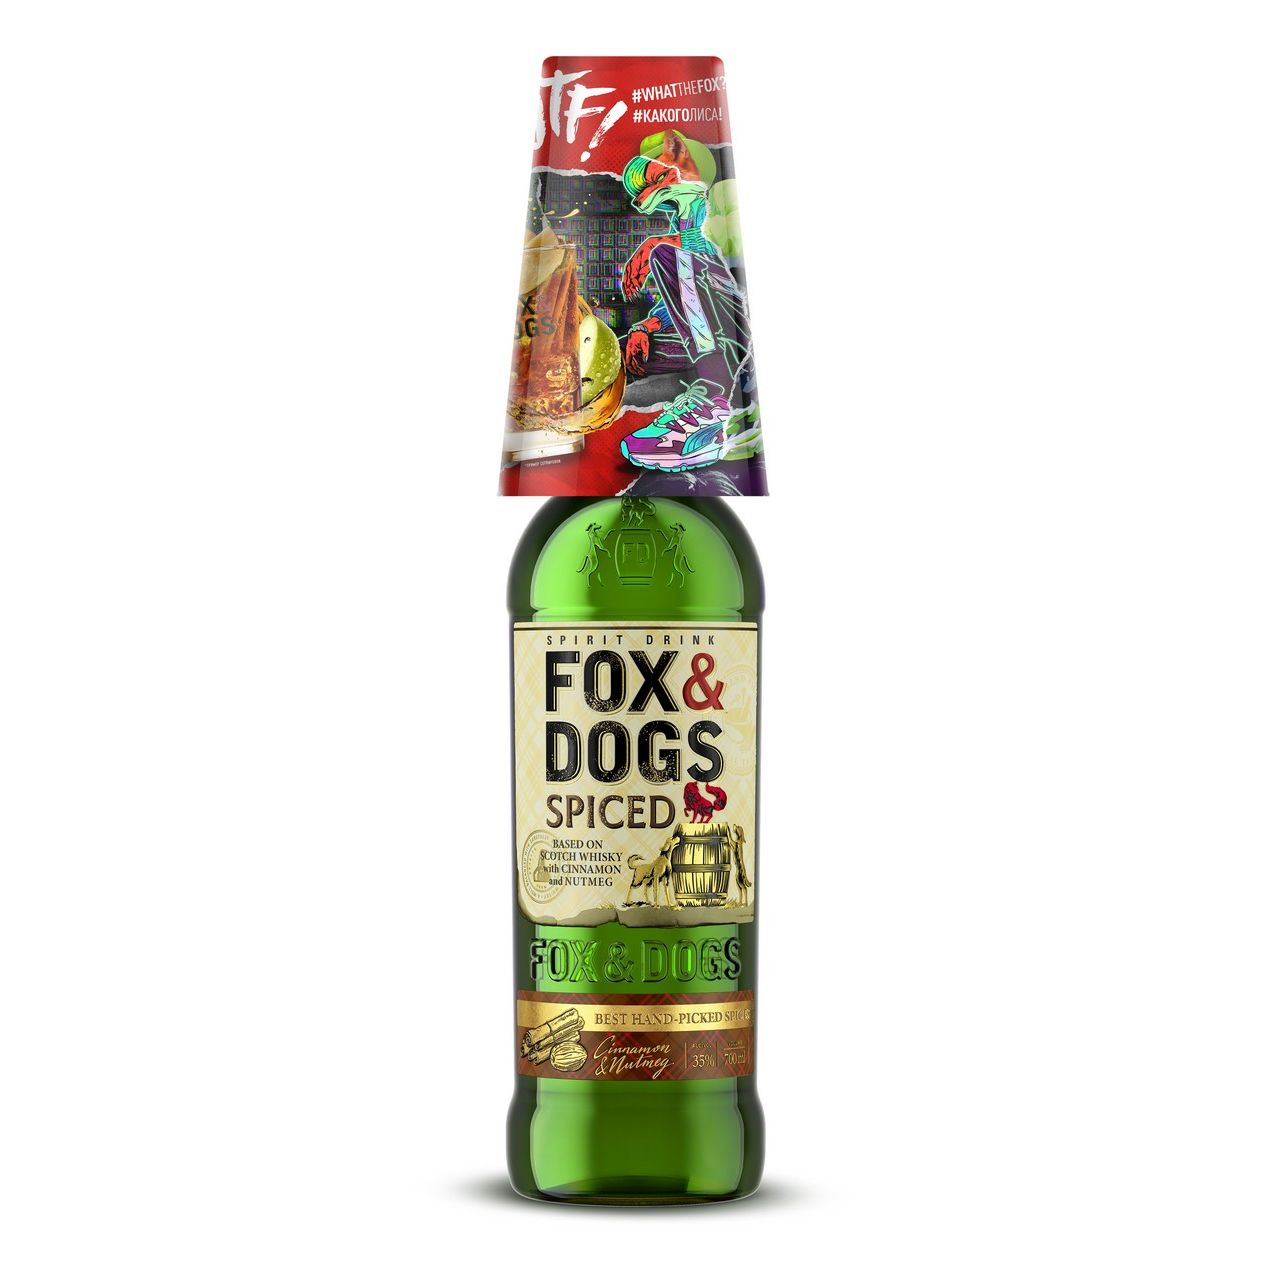 Fox and dogs отзывы. Виски Fox Dogs 0.7. Виски Фокс энд догс 0.7 купажированный 40. Виски Fox and Dogs Spiced. Настойка Фокс энд догс Спайсд полусладкая 0.7.